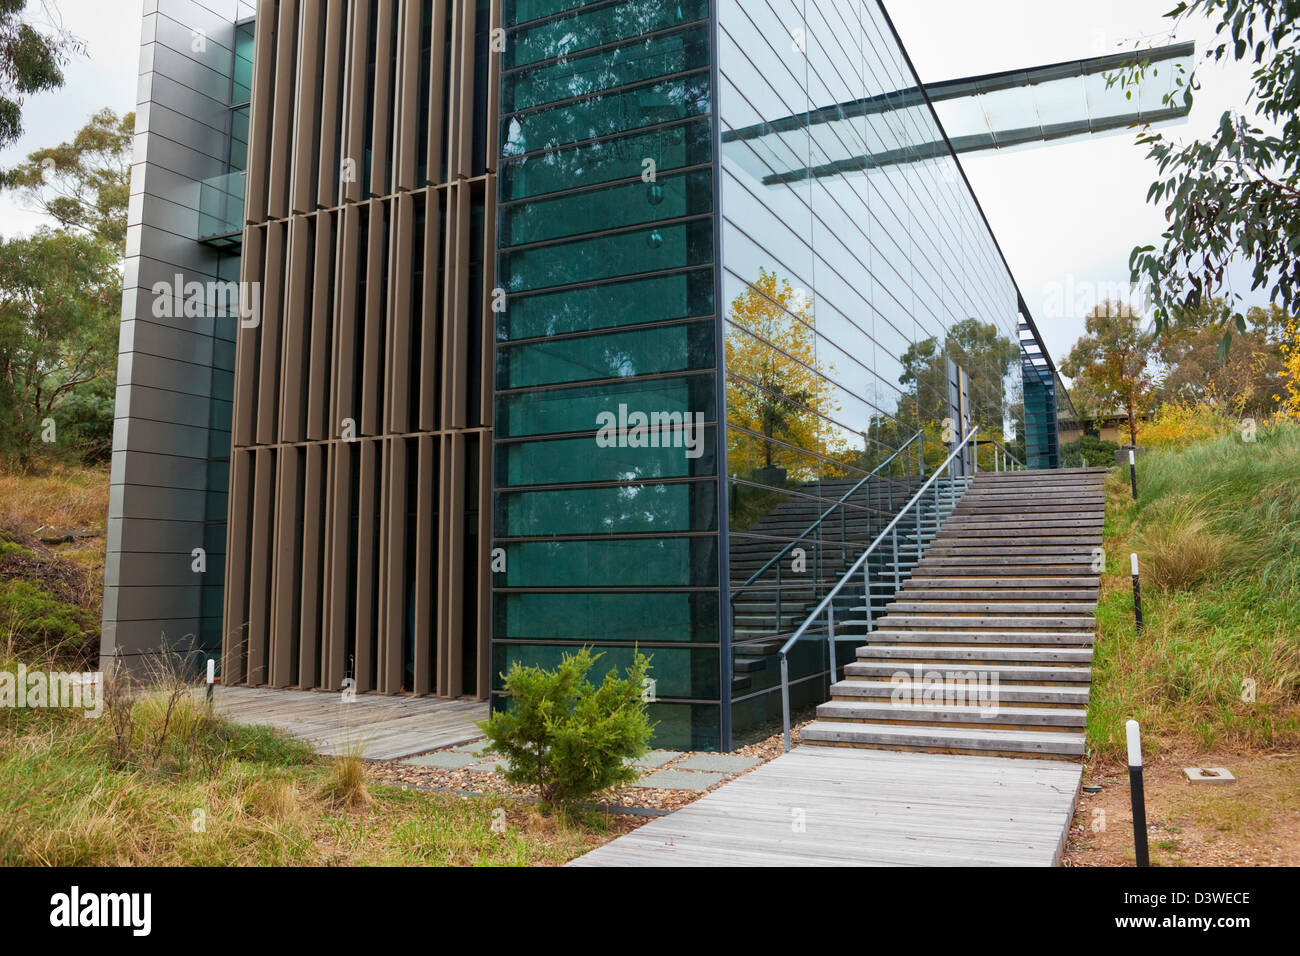 The Embassy of Finland. Yarralumla, Canberra, Australian Capital Territory (ACT), Australia Stock Photo